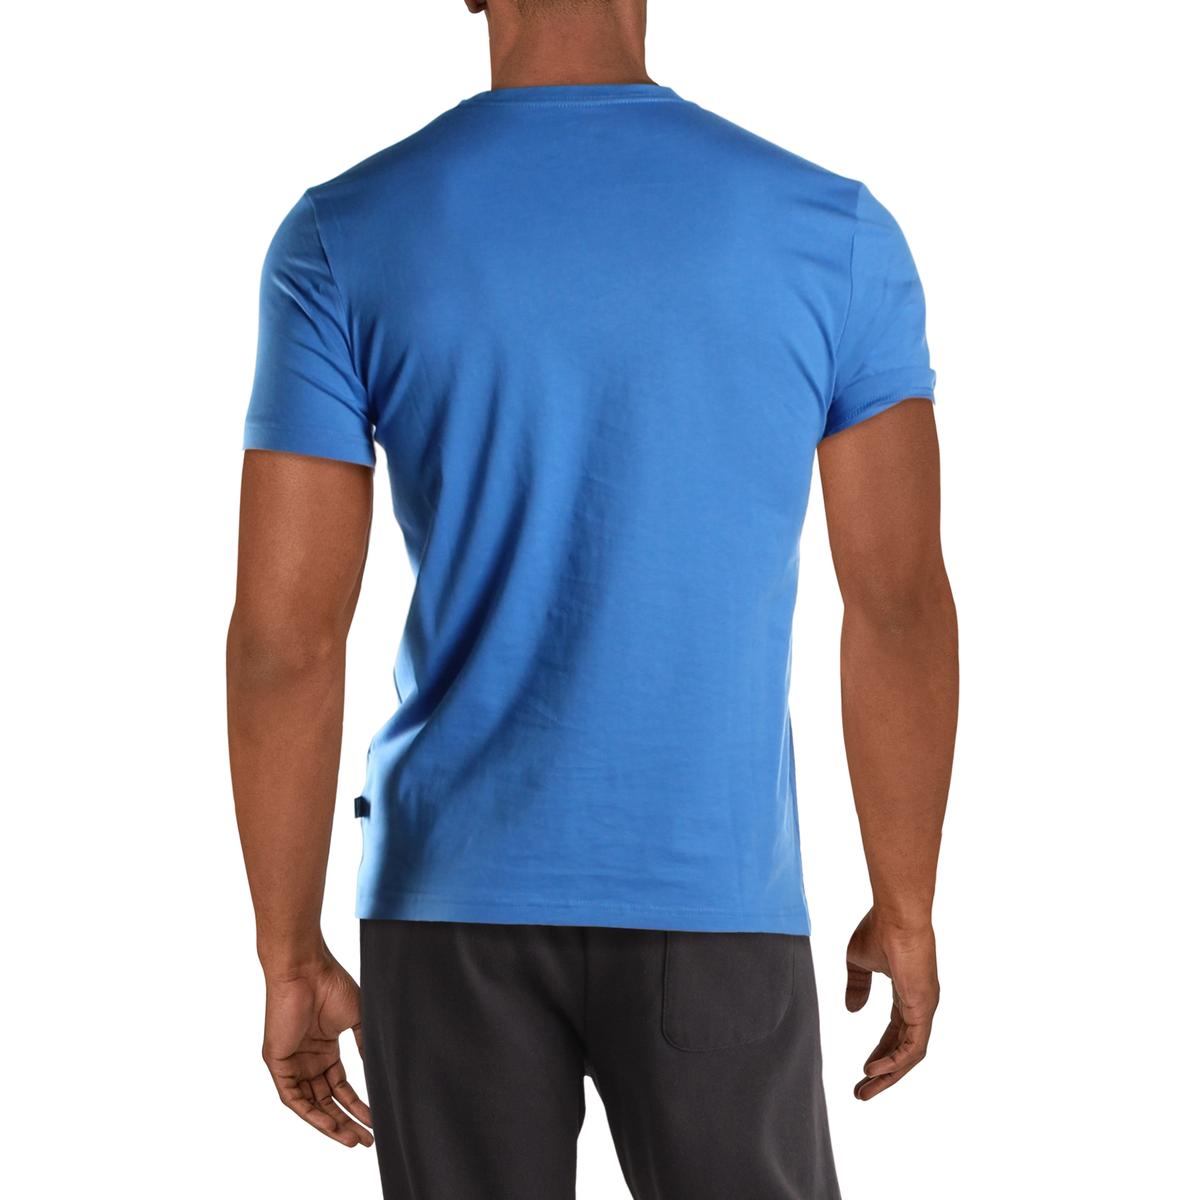 Puma Mens Running Fitness Workout T-Shirt Athletic BHFO 9386 | eBay